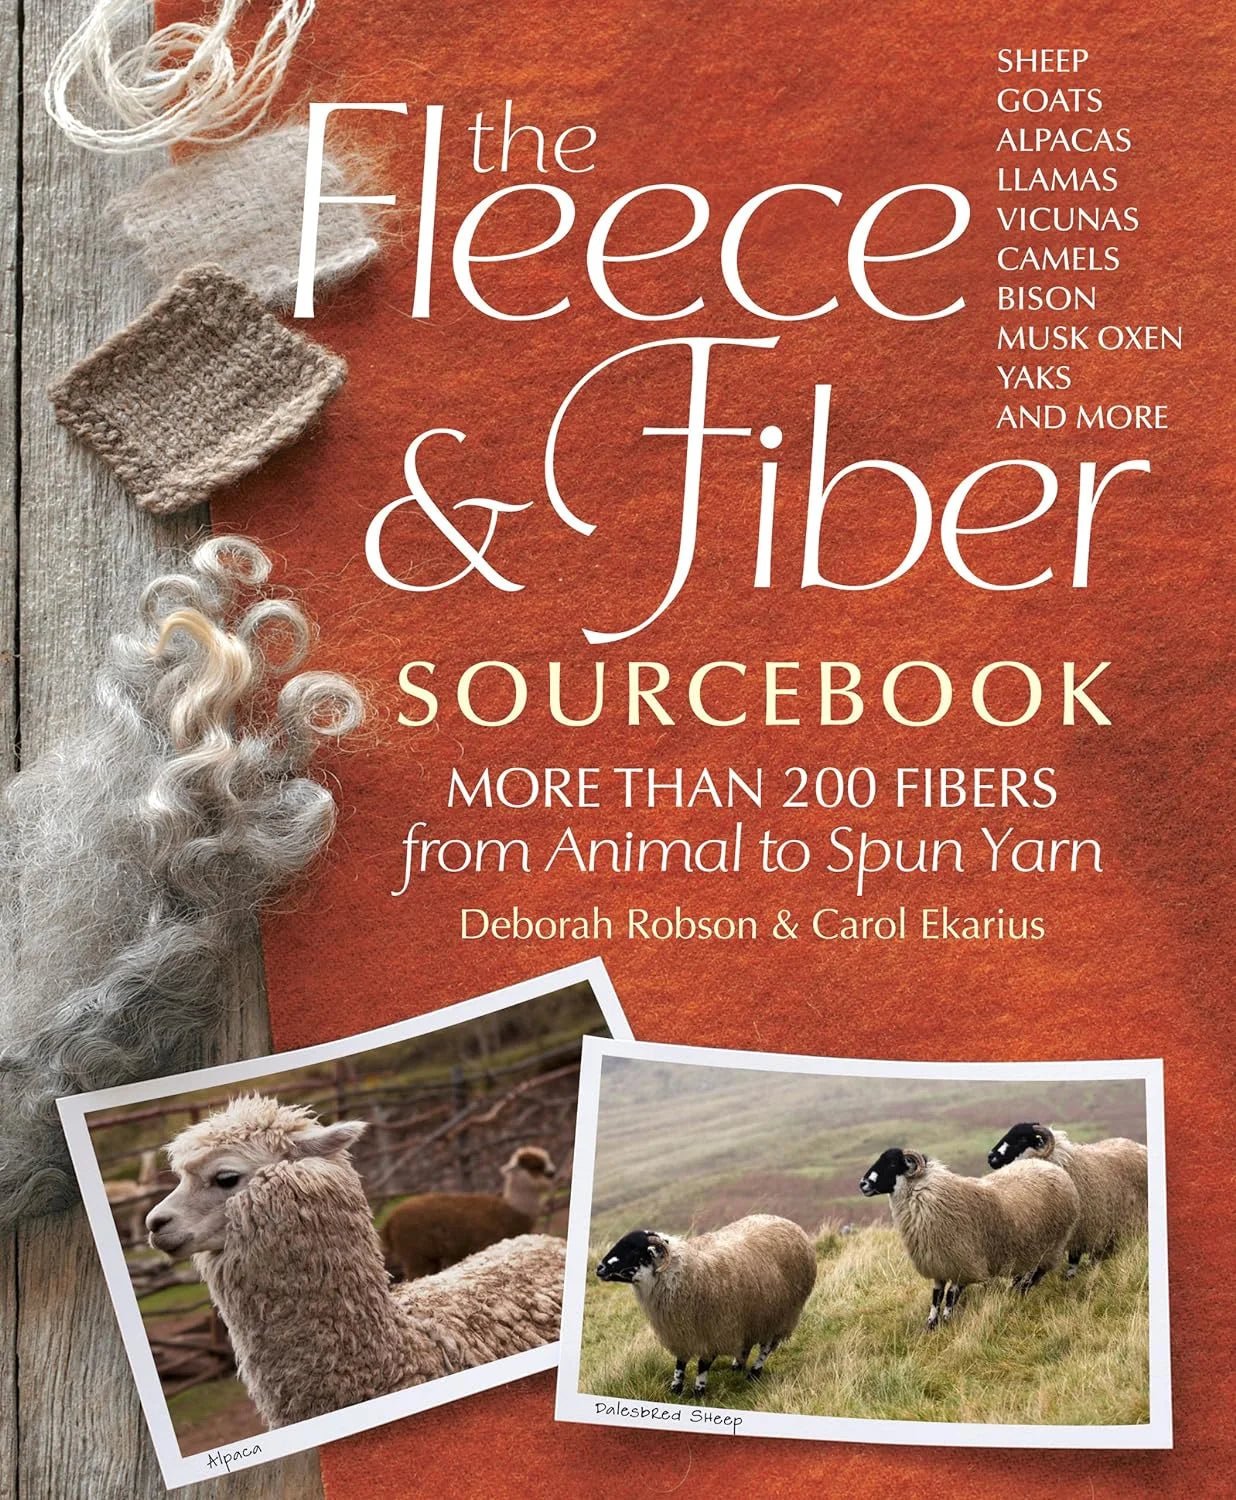 The Fleece &amp; Fiber Sourcebook - Carol Ekarius and Deborah Robson - The Little Yarn Store